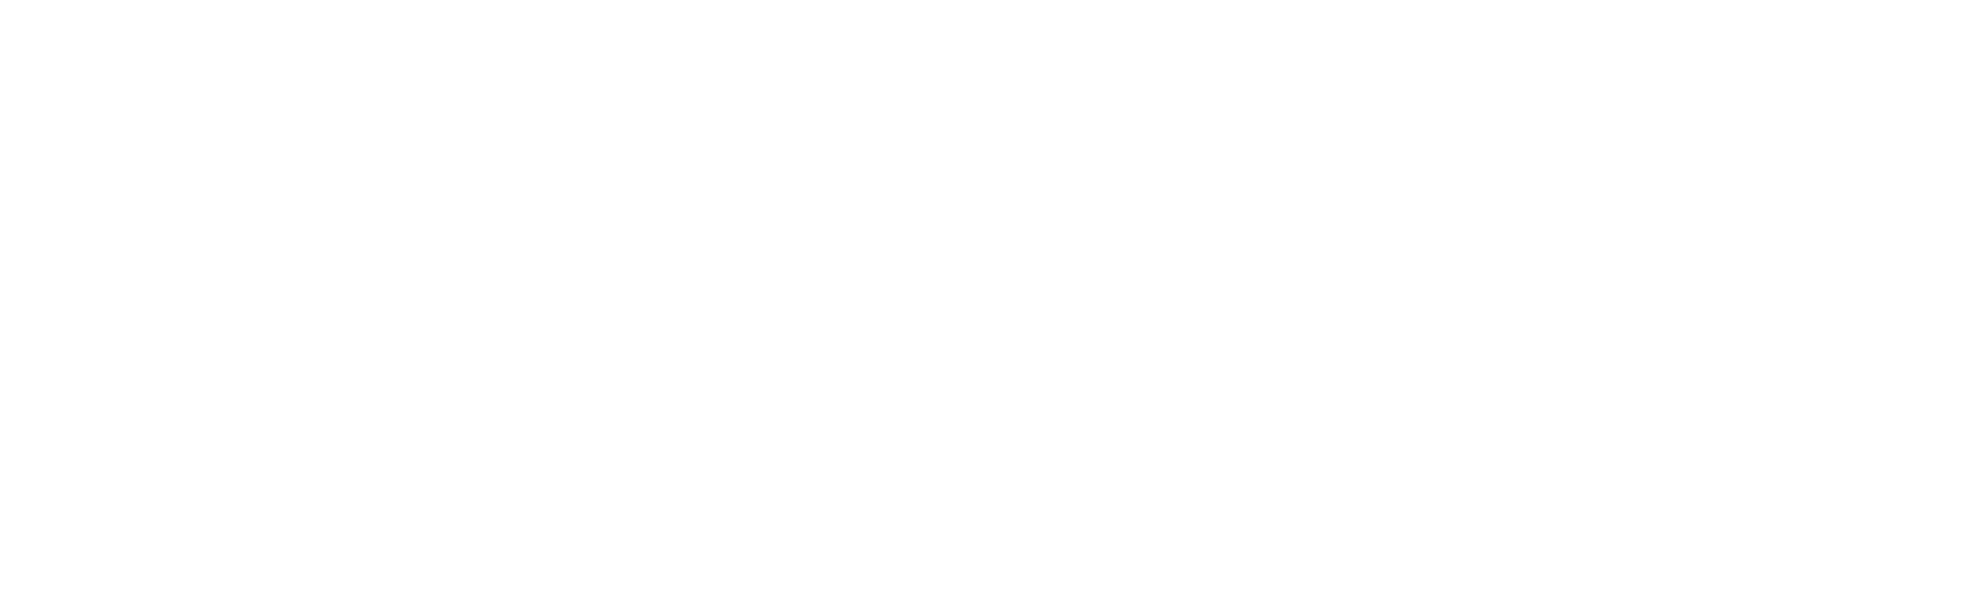 Cantastic logo